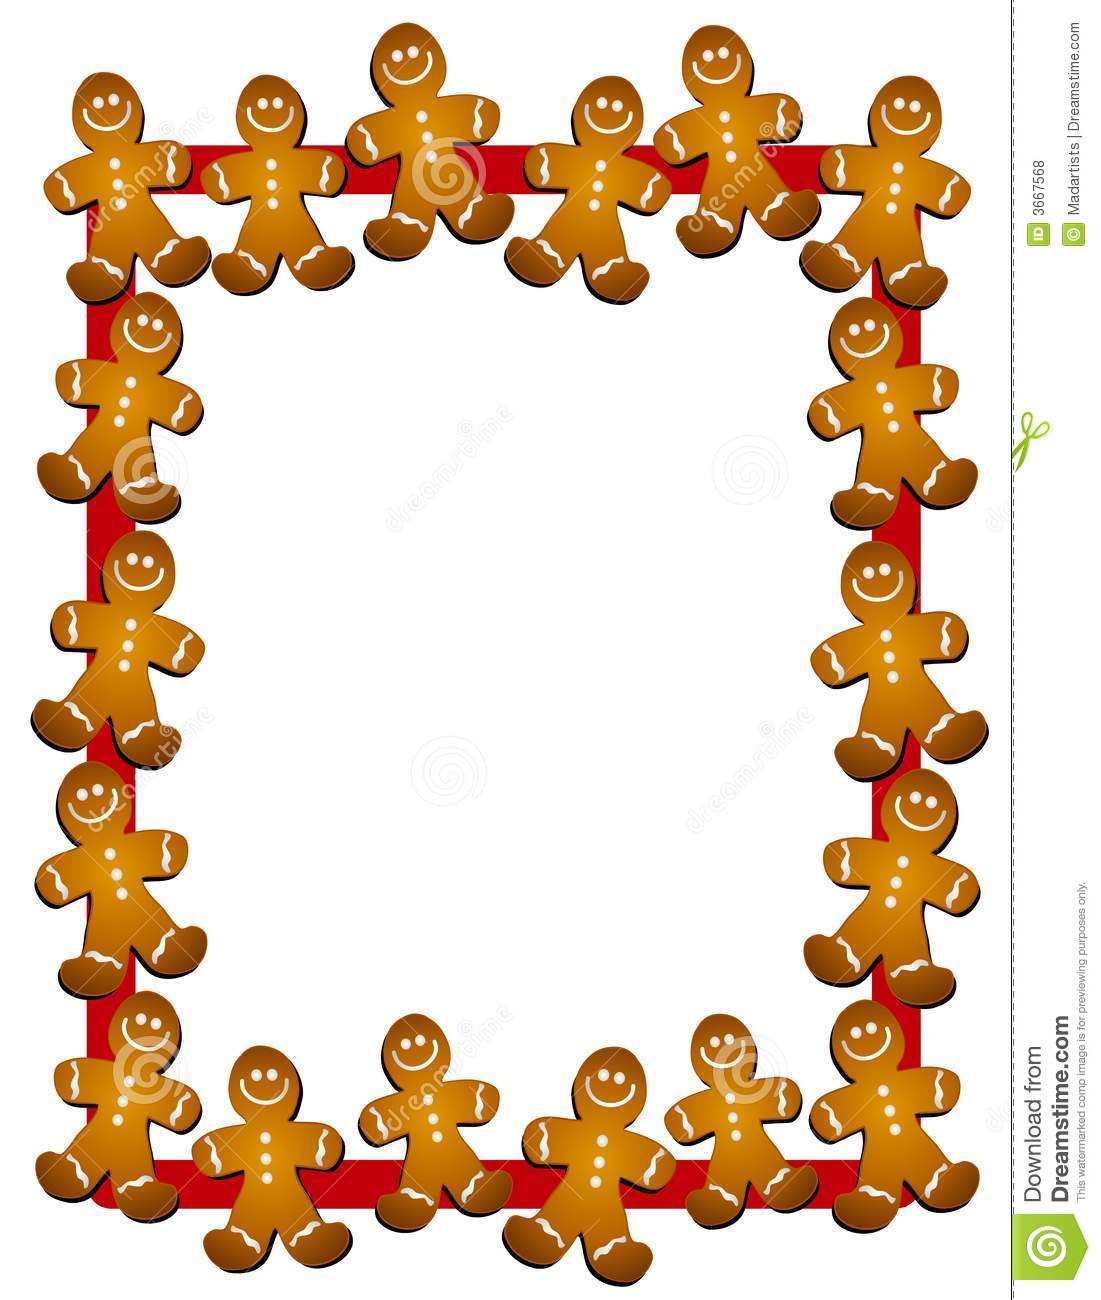 Gingerbread Man Border Or Frame Royalty Free Stock Photos   Image